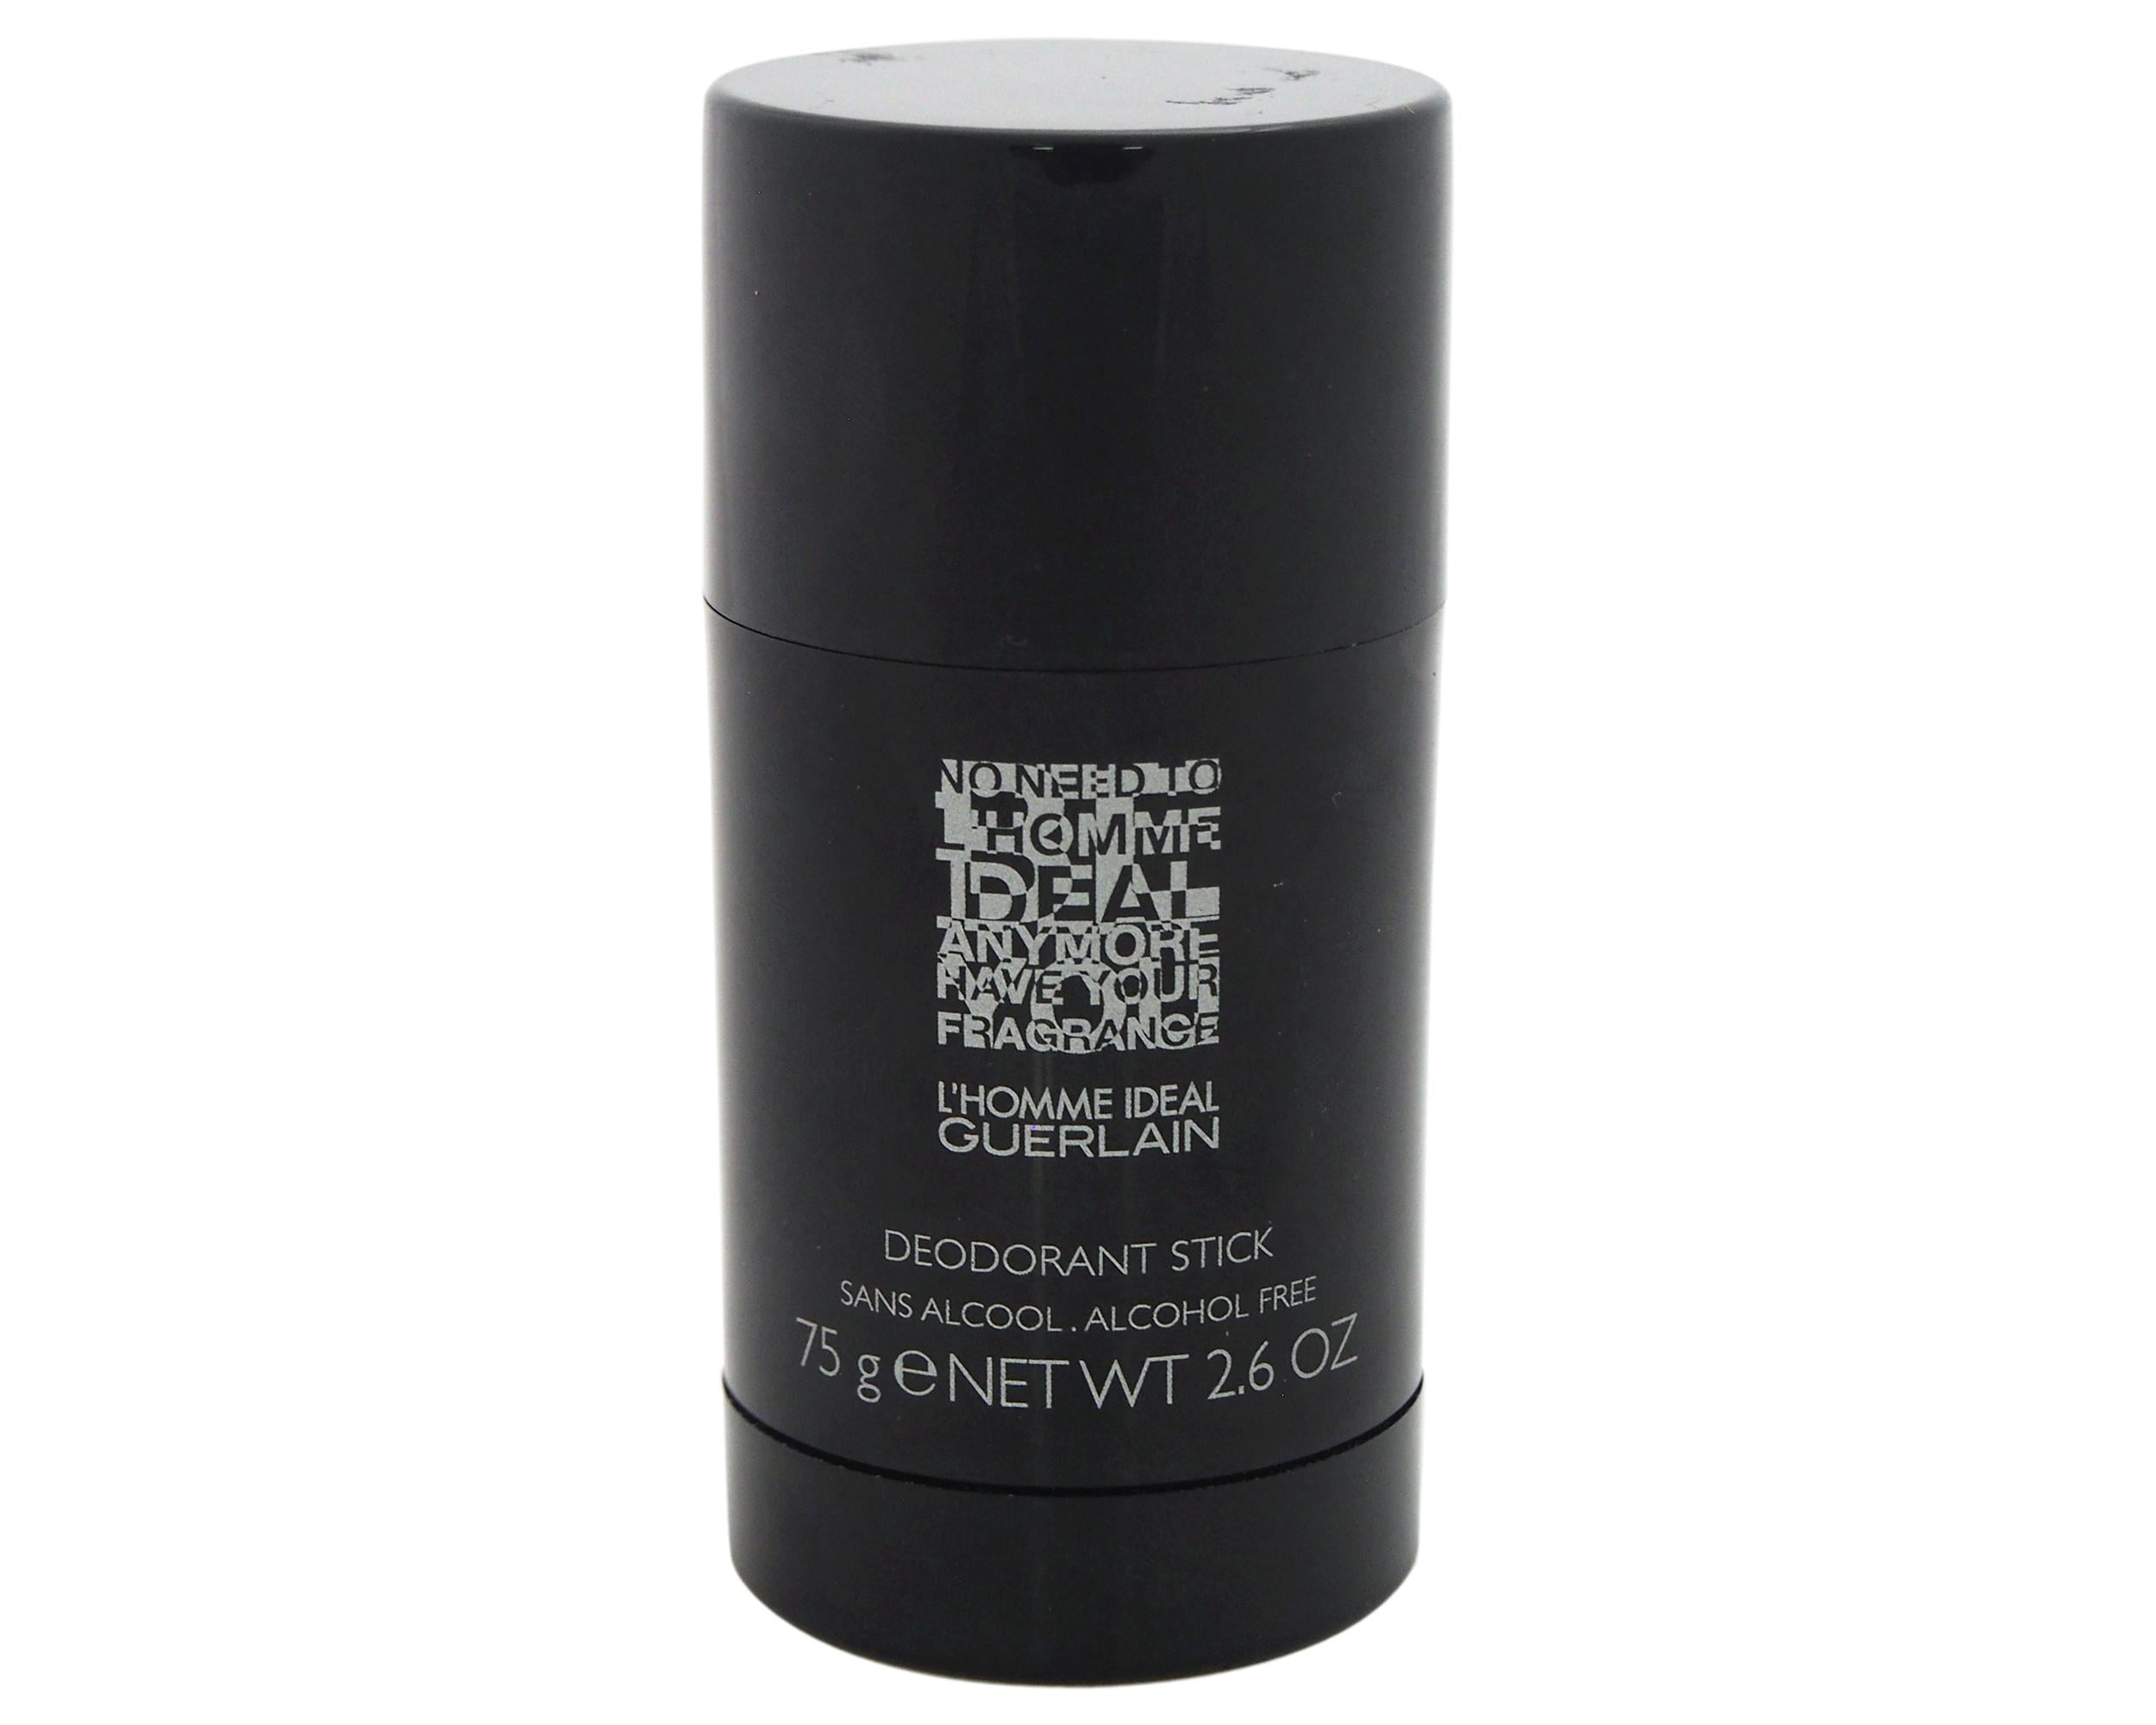 Chanel Allure Homme Sport Stick Deodorant ForMen 2.0 oz Brand New In Box  FRESH